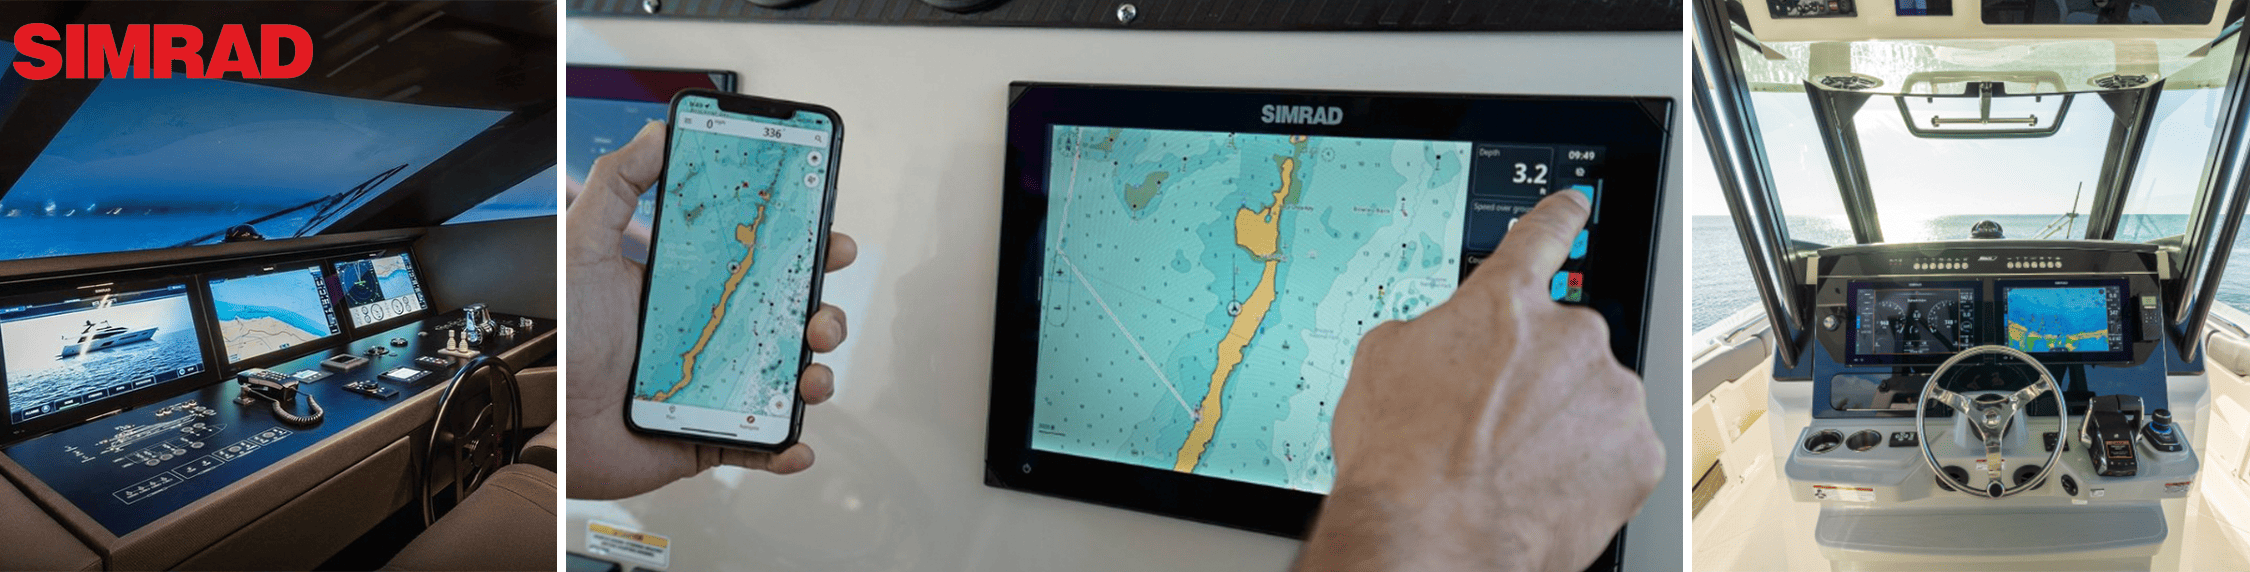 SIMRAD Multifunction Displays, Chartplotters & Fishfinder Combos